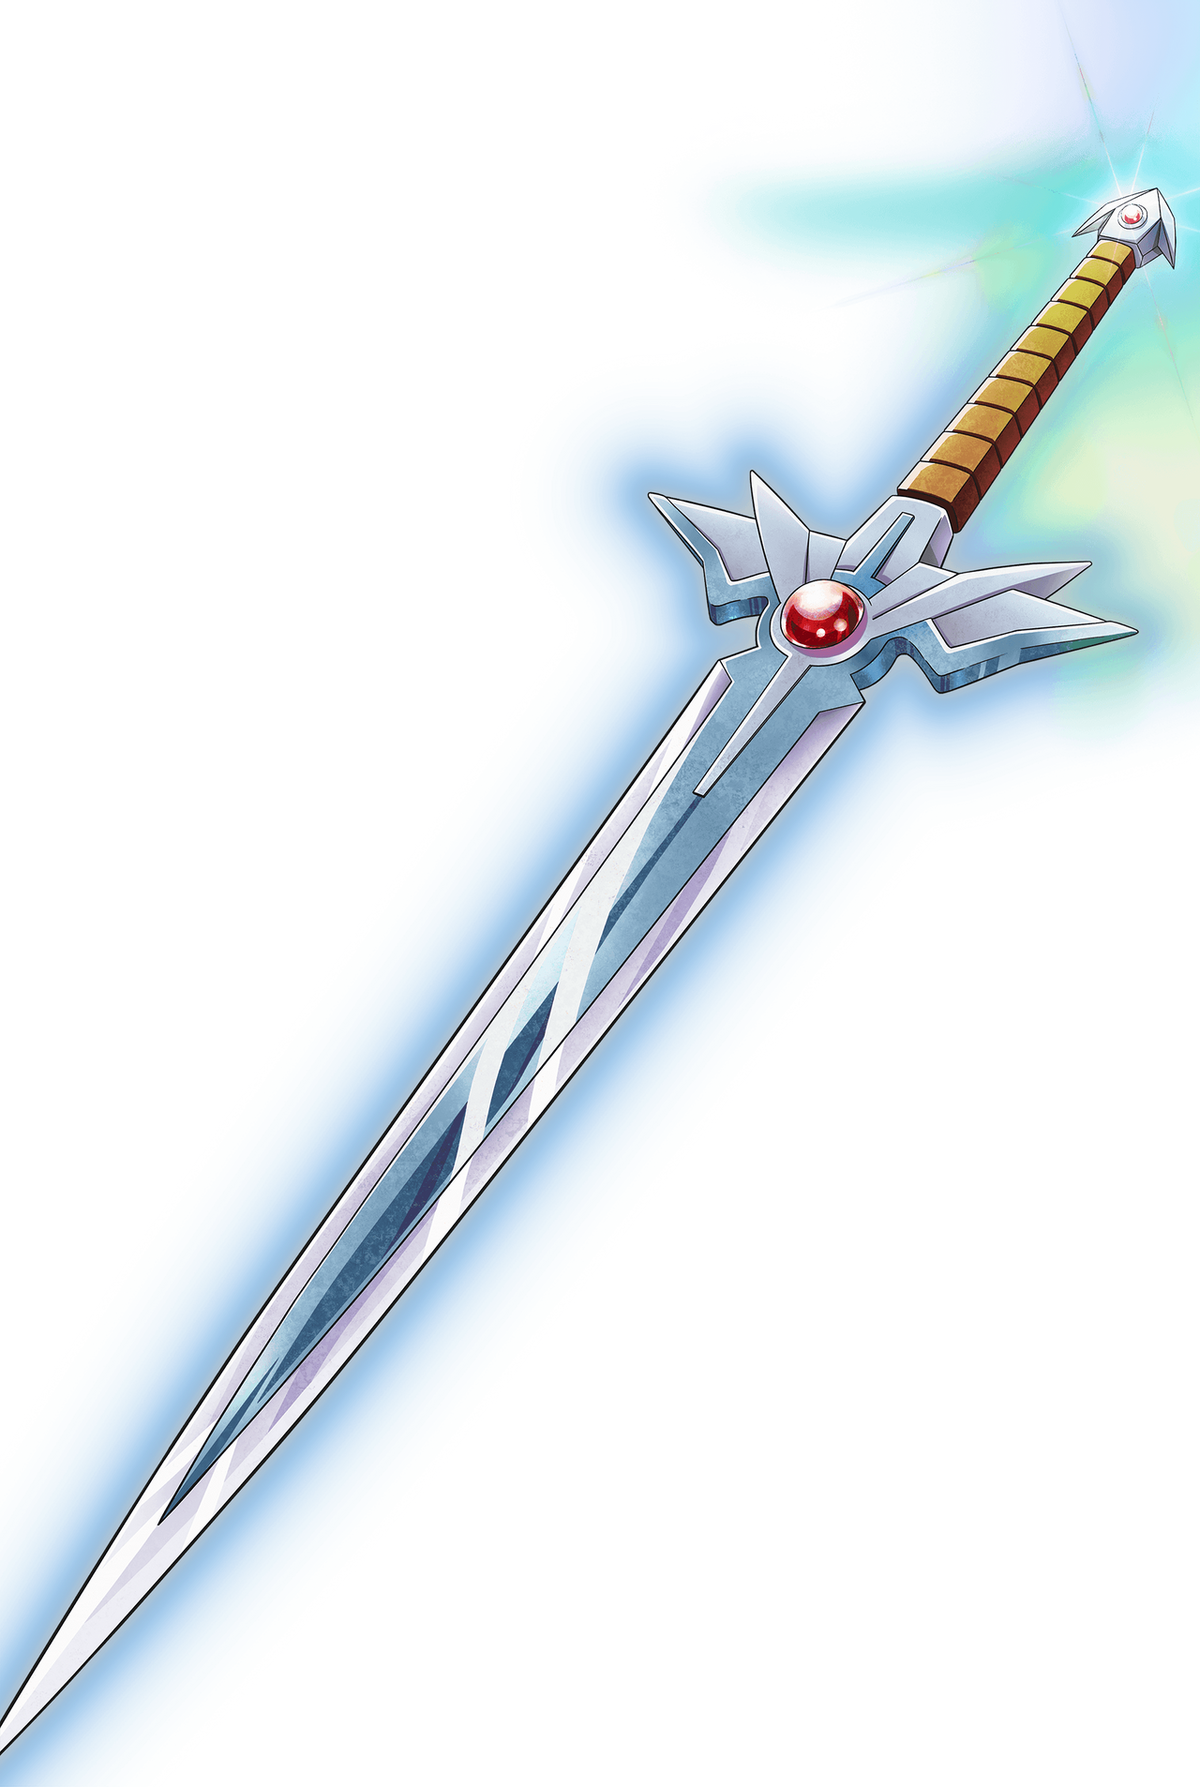 Amazon.com : Hejiu Cosplay Anime Swords Handmade Katana, Demon Slayer Sword,  Samurai Sword Real Metal, Stainless Steel, About 40 inch Overall : Sports &  Outdoors